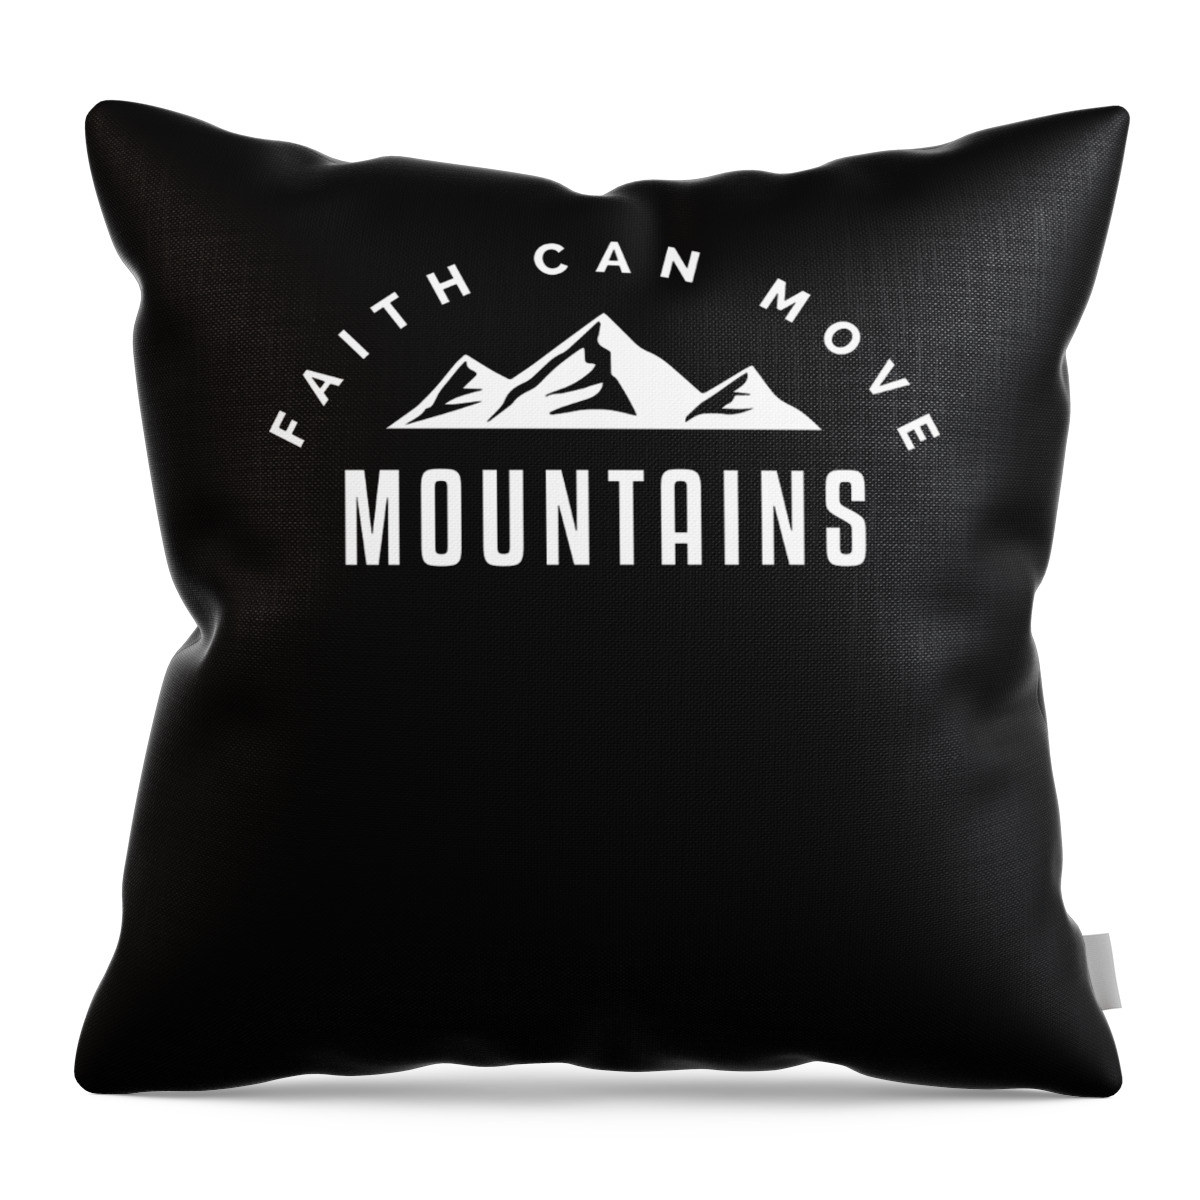 Mountains Throw Pillow featuring the digital art Mountains - Bible Verses 2 - Christian - Faith Based - Inspirational - Spiritual, Religious by Studio Grafiikka